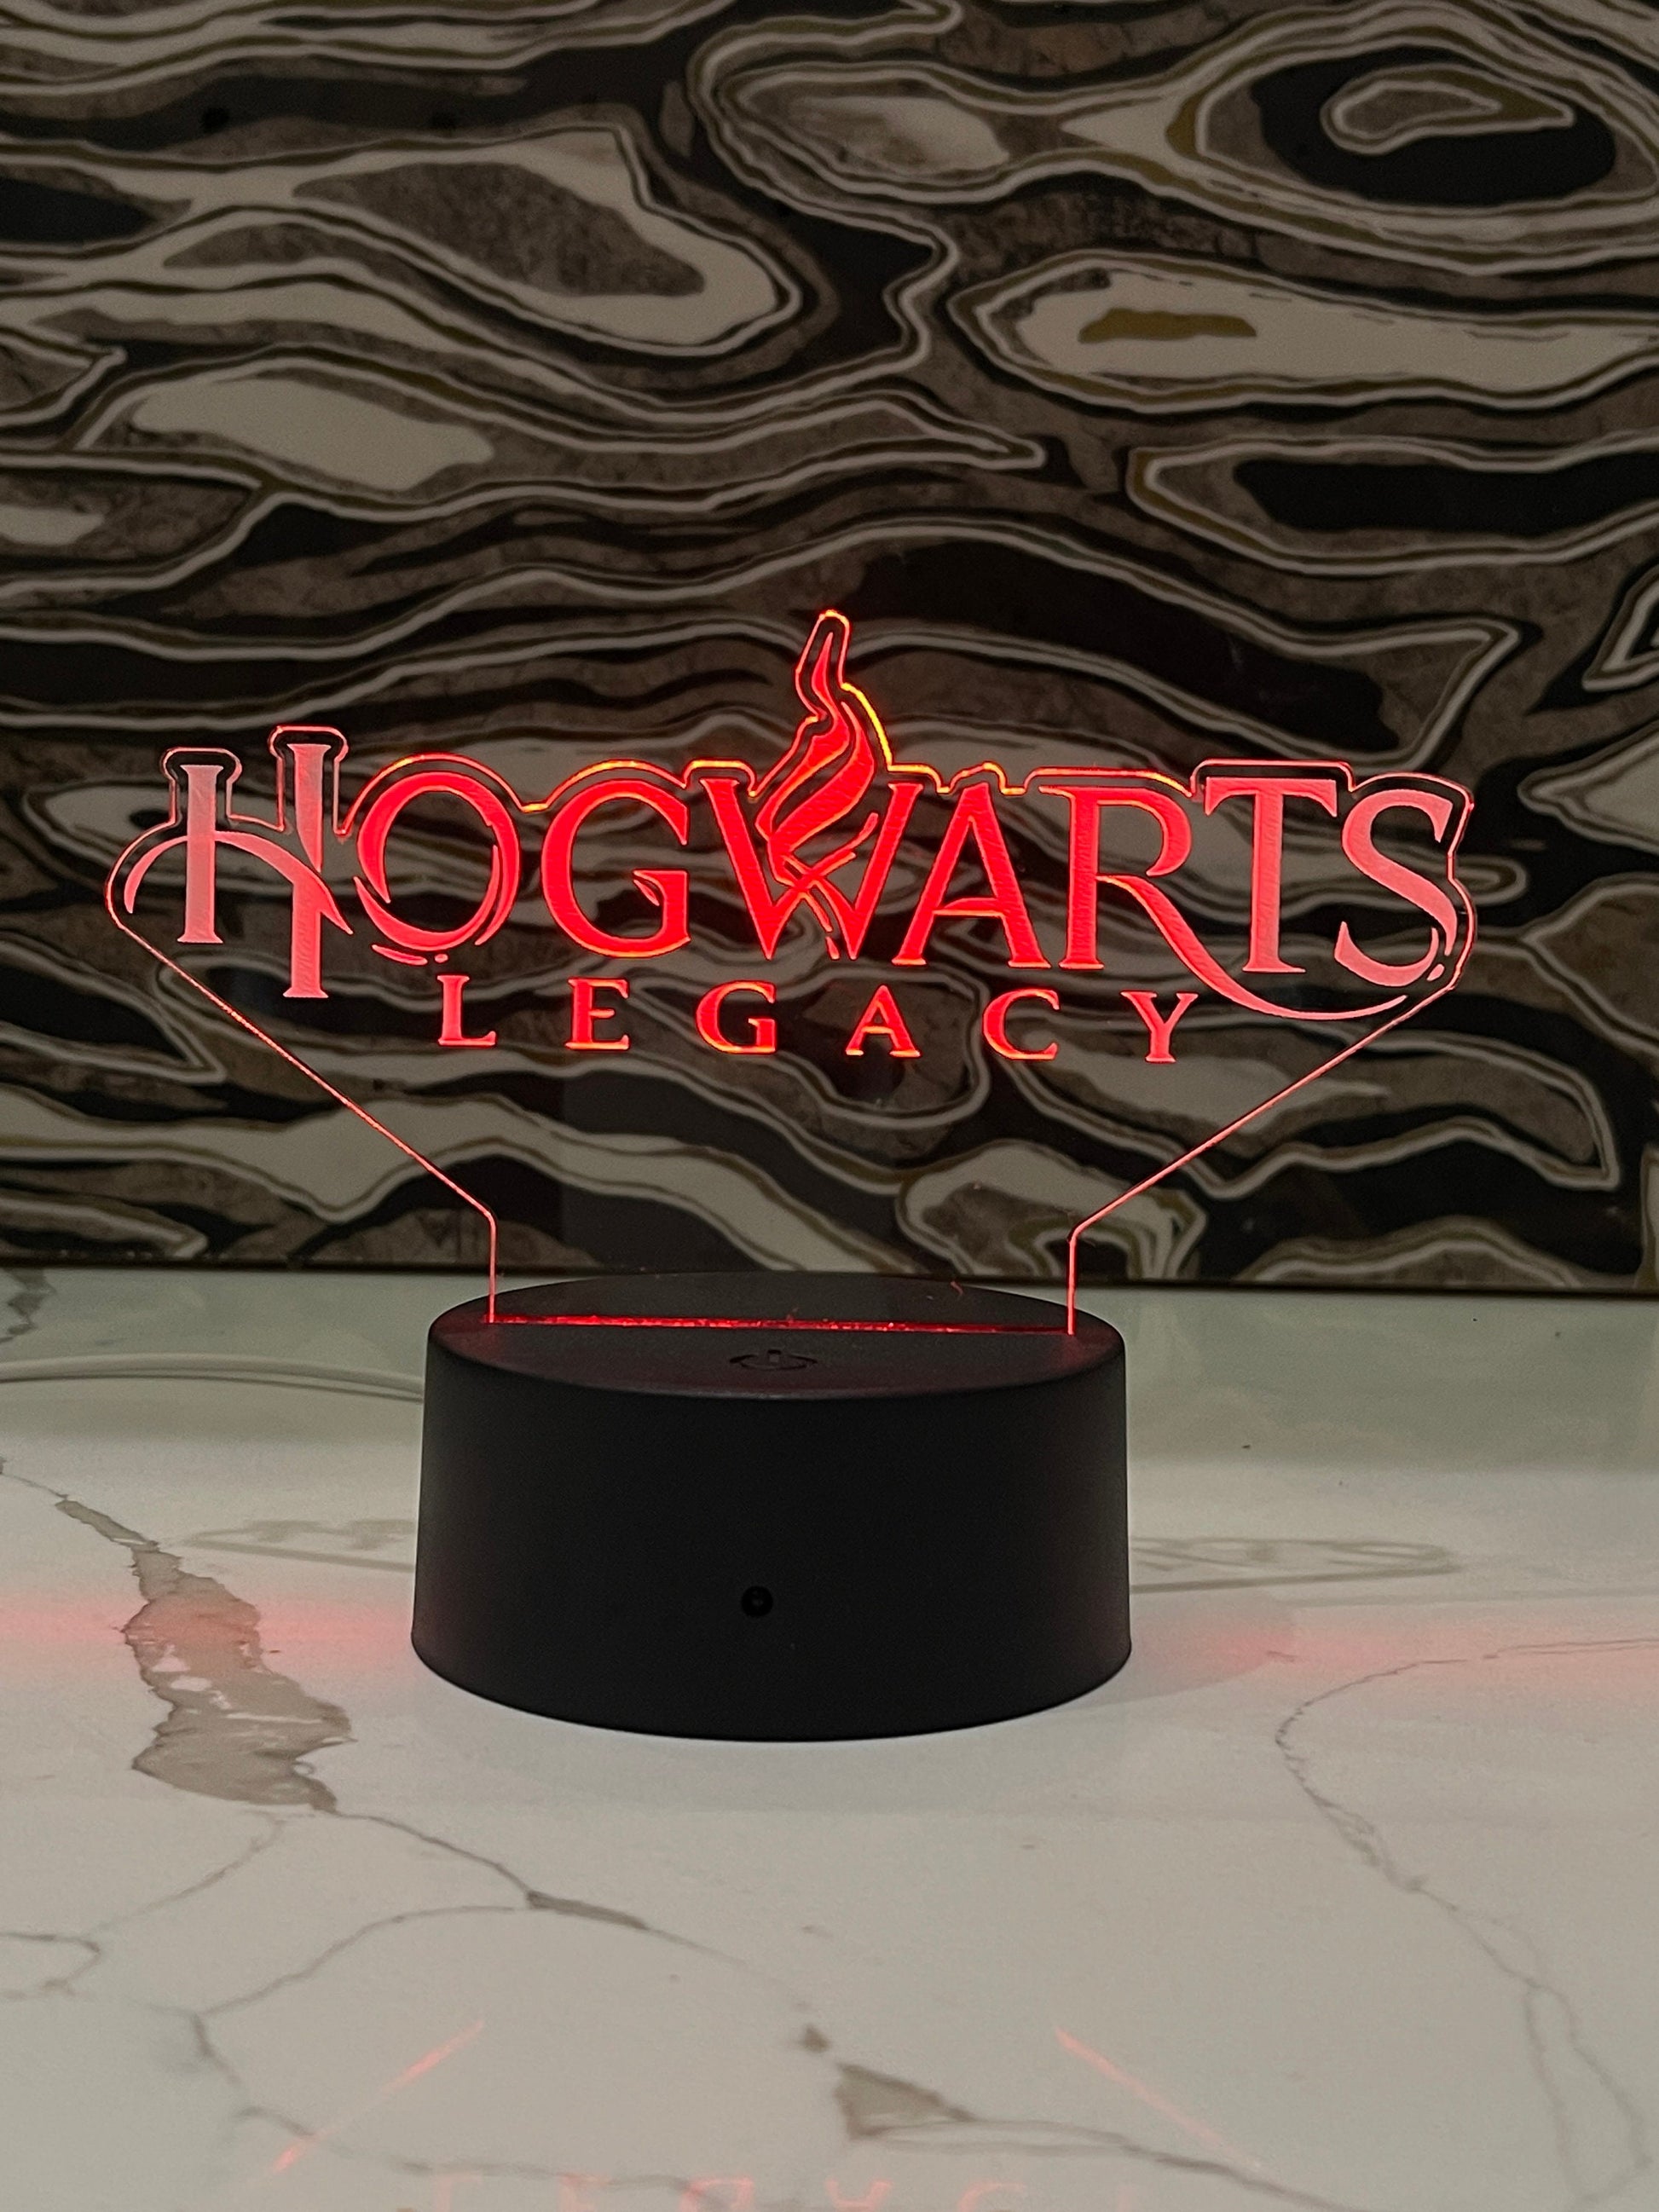 Hogwarts Legacy Custom Room Home Decor Sign | Gaming Sign | Gaming Room Decor | Gaming Desk Accessories | Kids Gaming Night Light - Crypto Coin Display